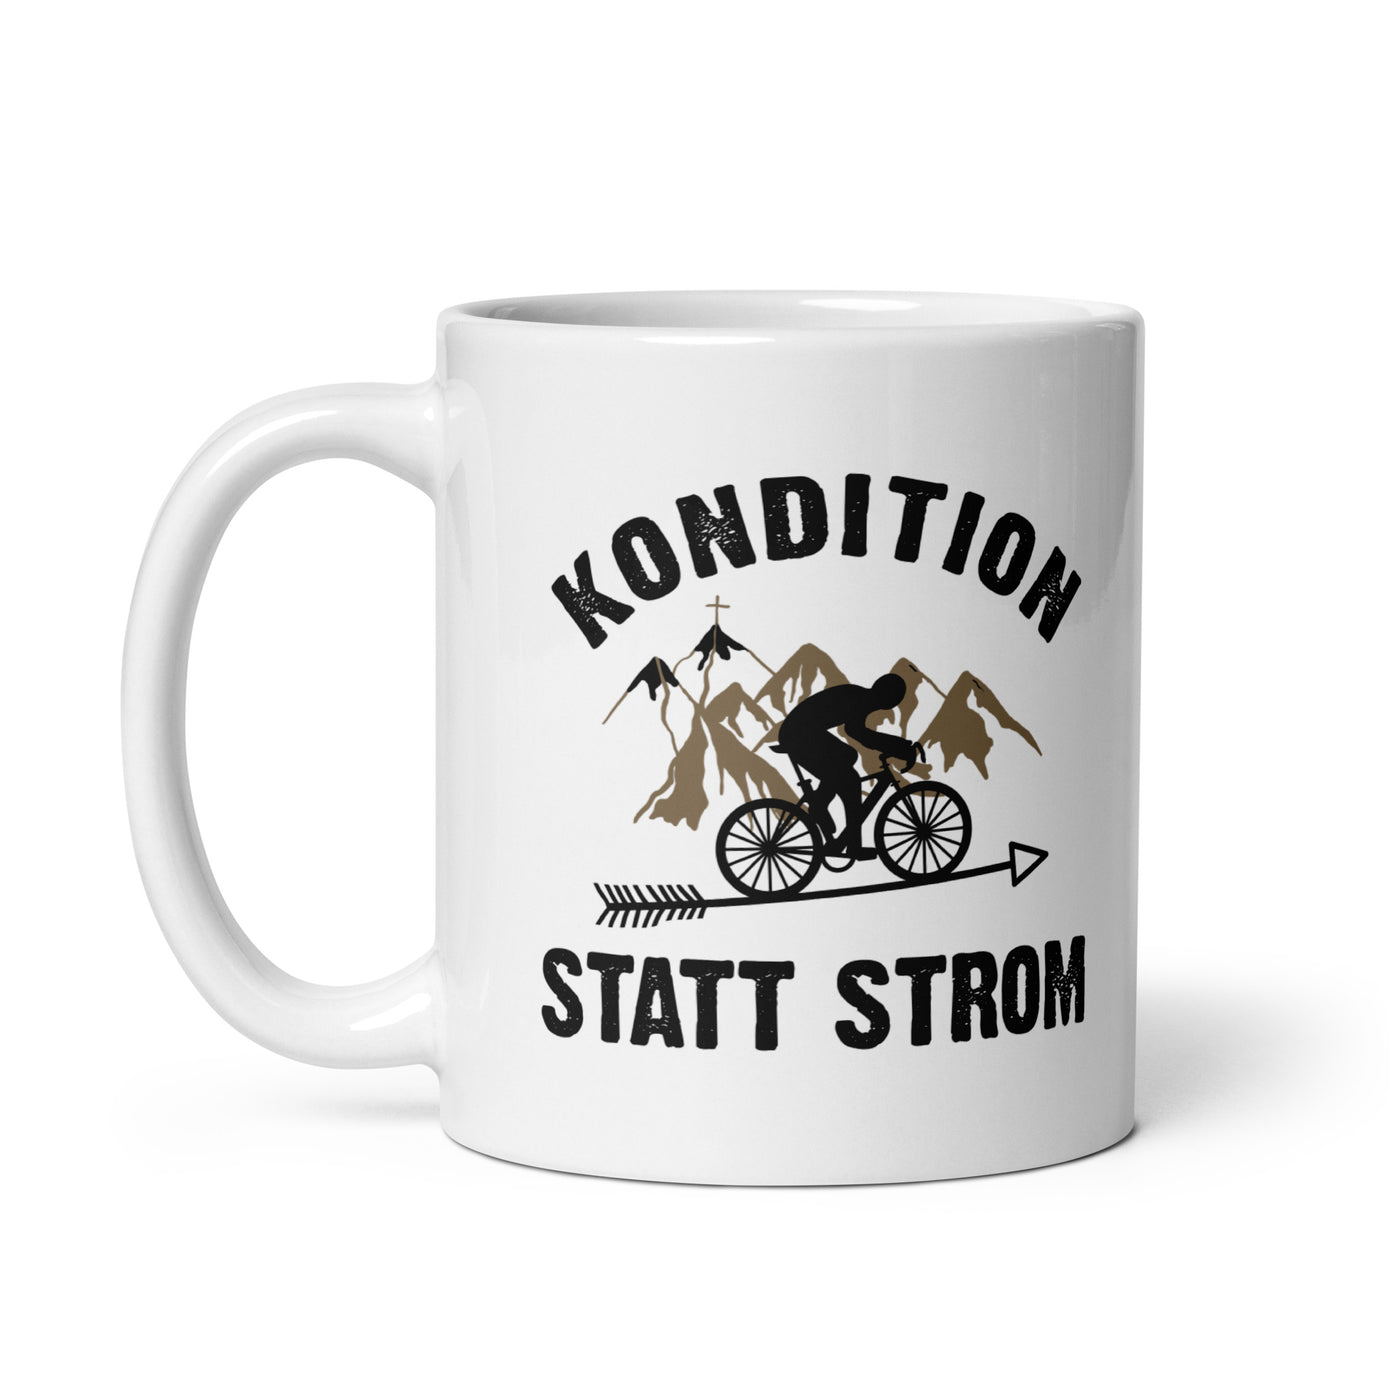 Kondition Statt Strom - Tasse fahrrad mountainbike 11oz